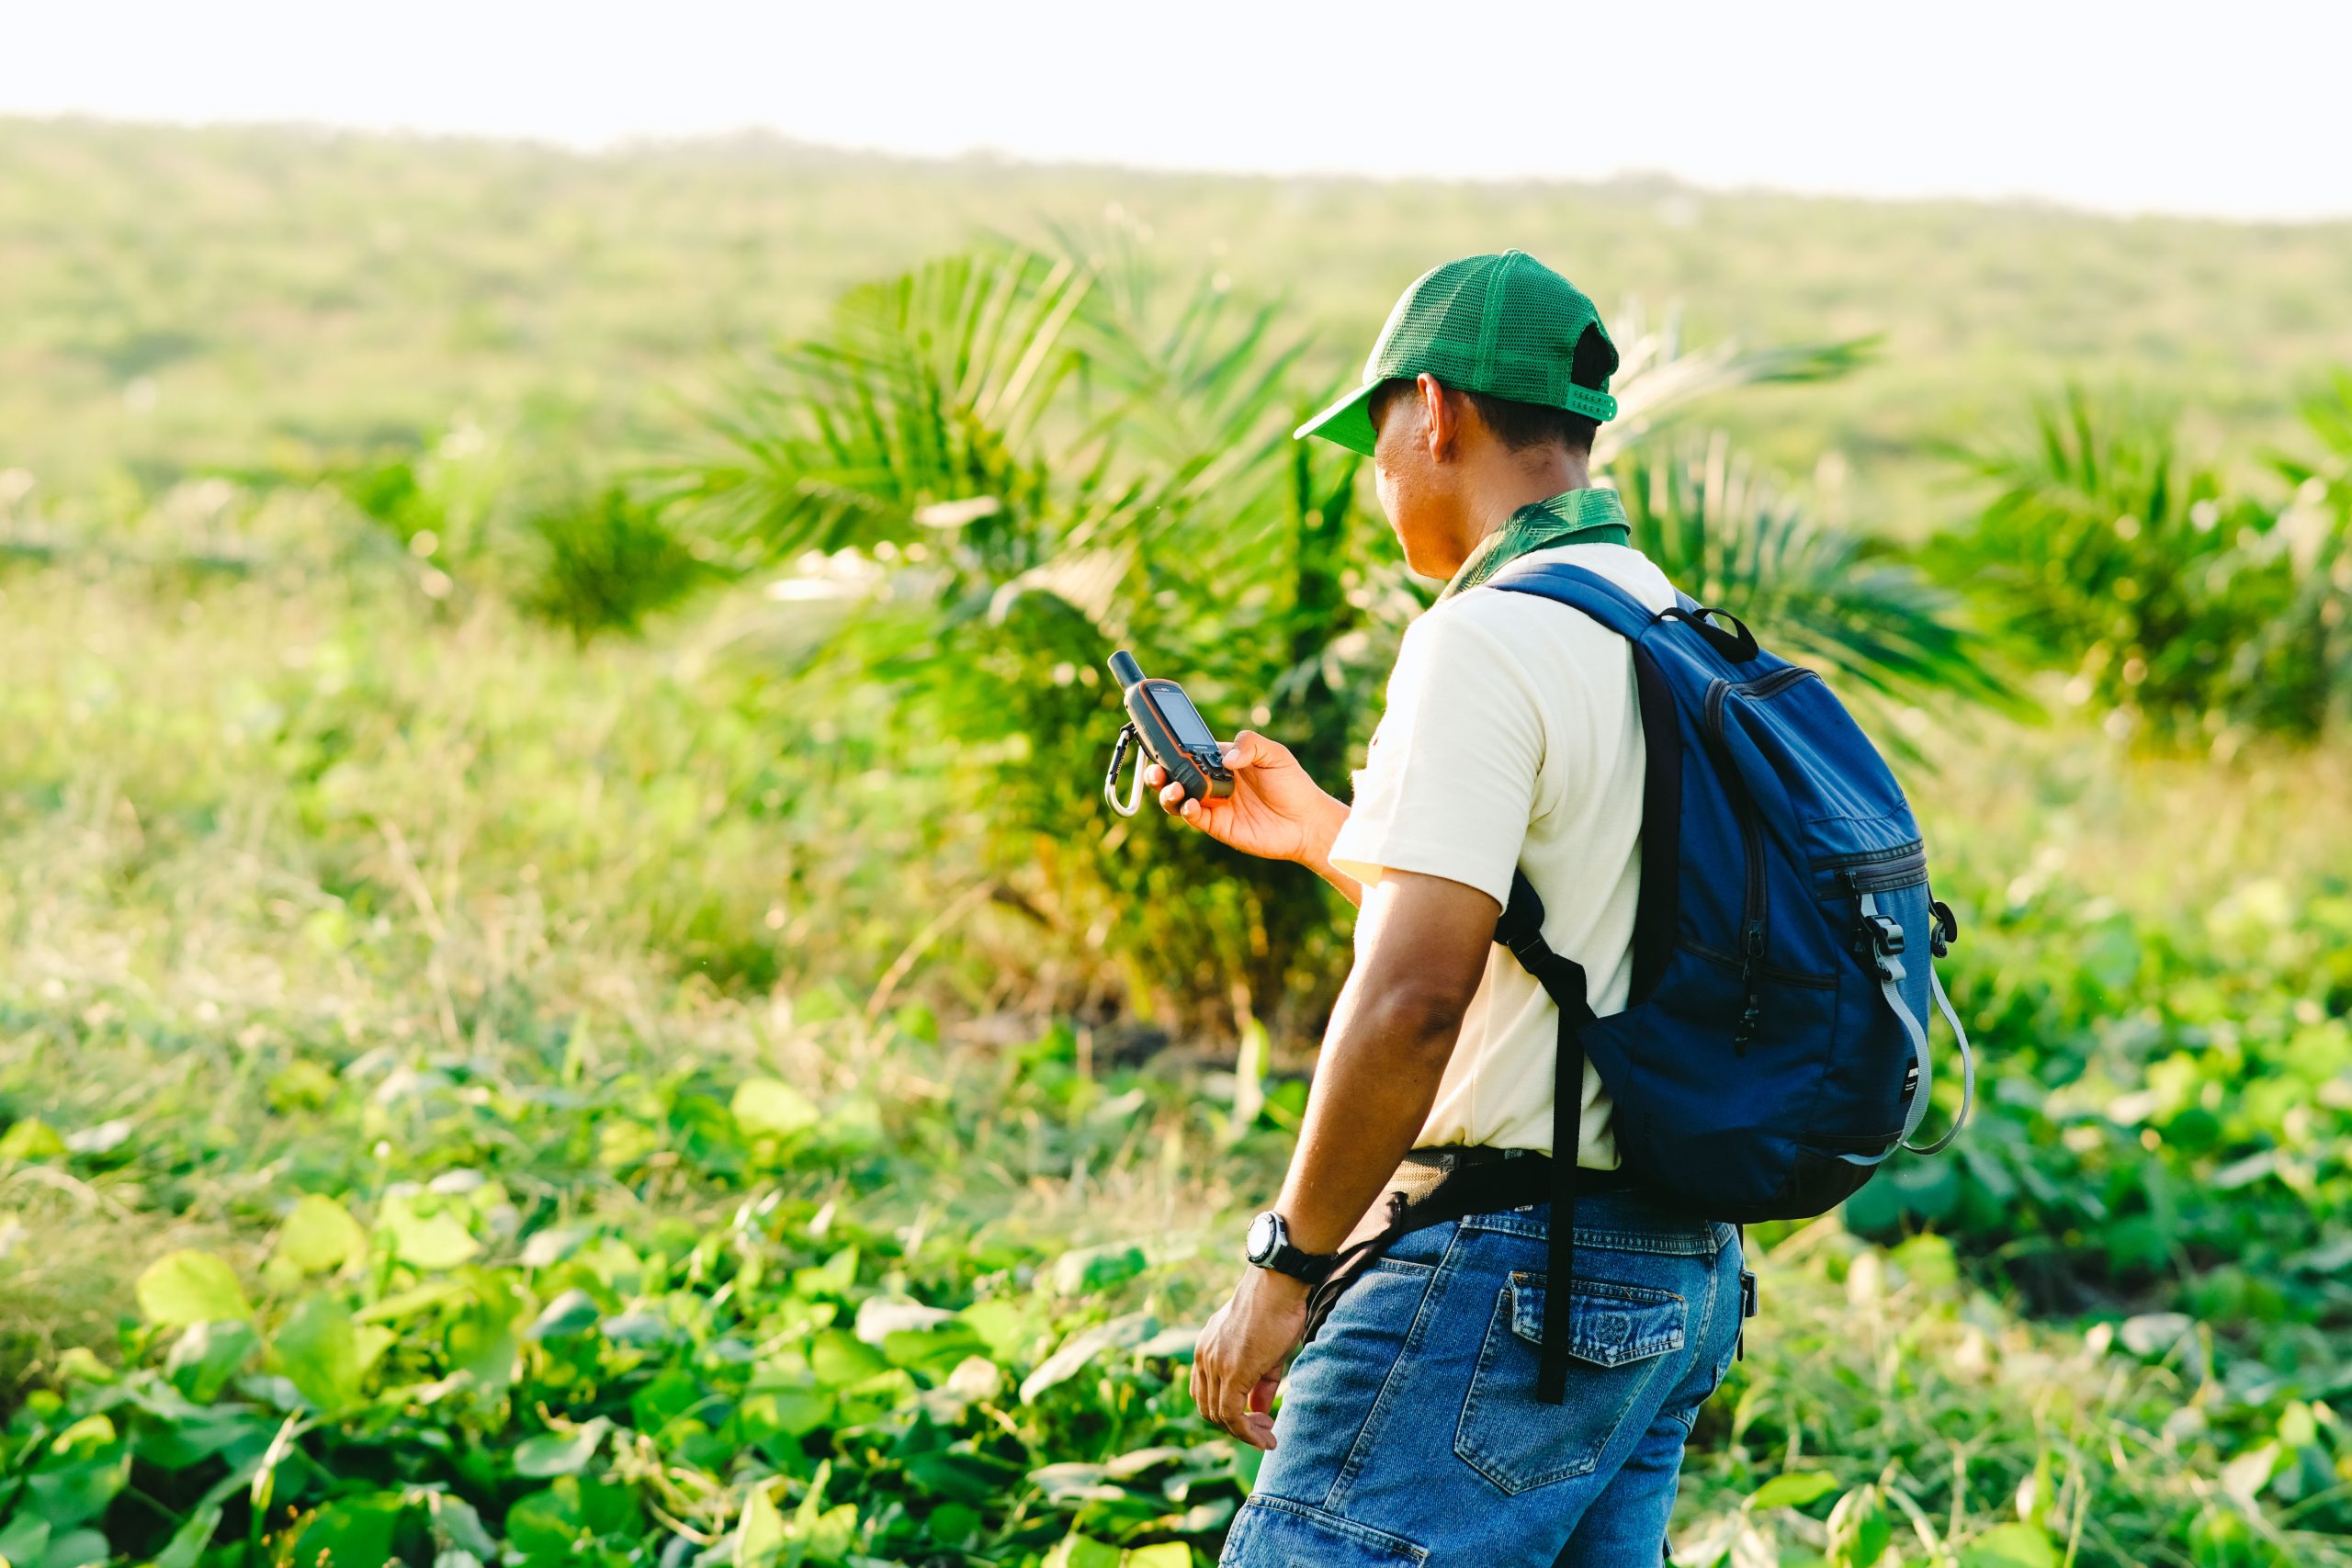 Musim Mas staff walking among the greenery in Sorek plantation and navigating using GPS.